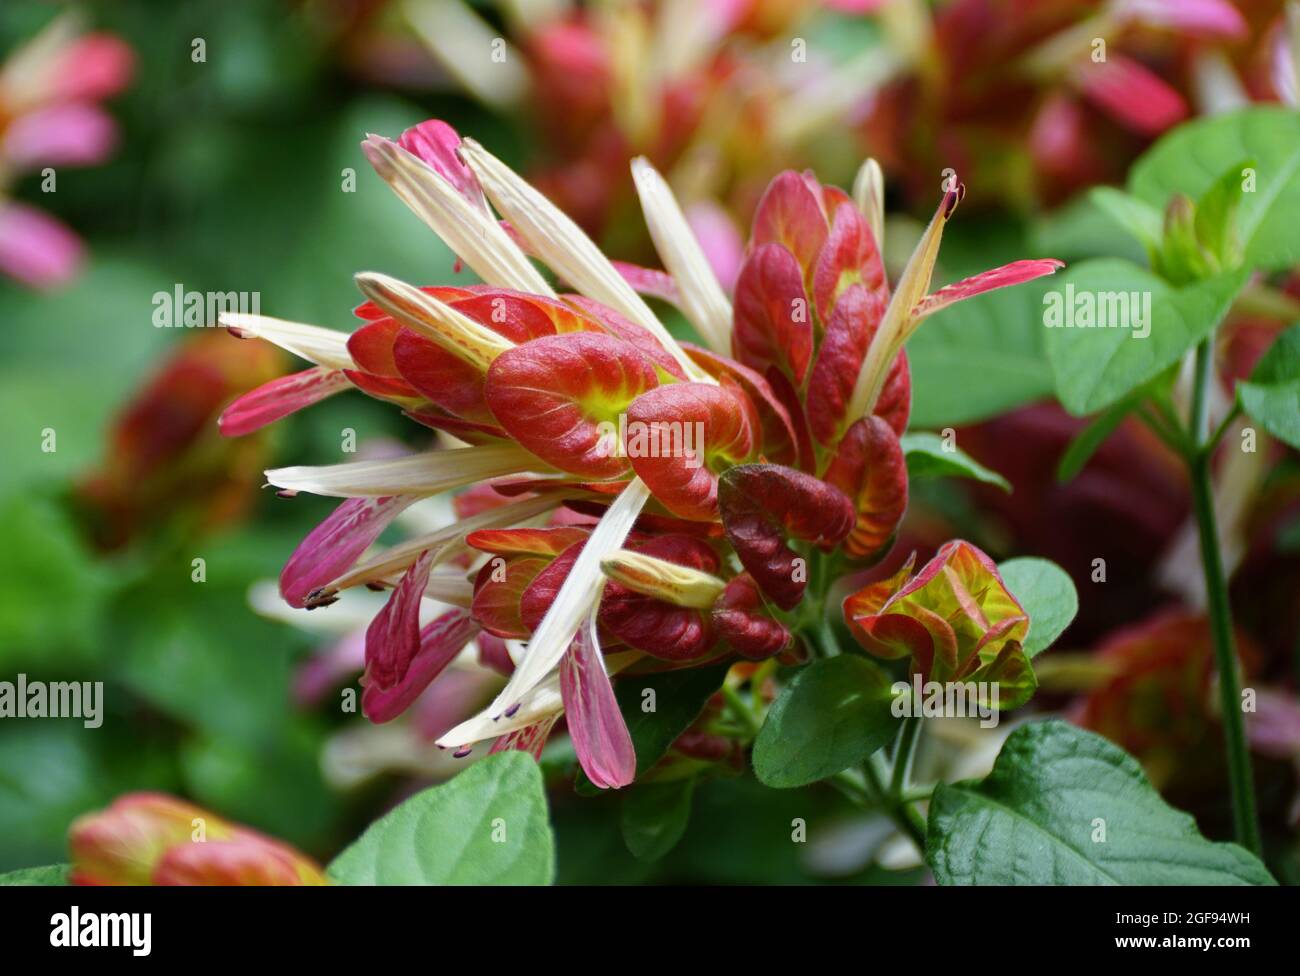 Unique red flower of a shrimp plant with scientific name Justicia Brandegeana Stock Photo